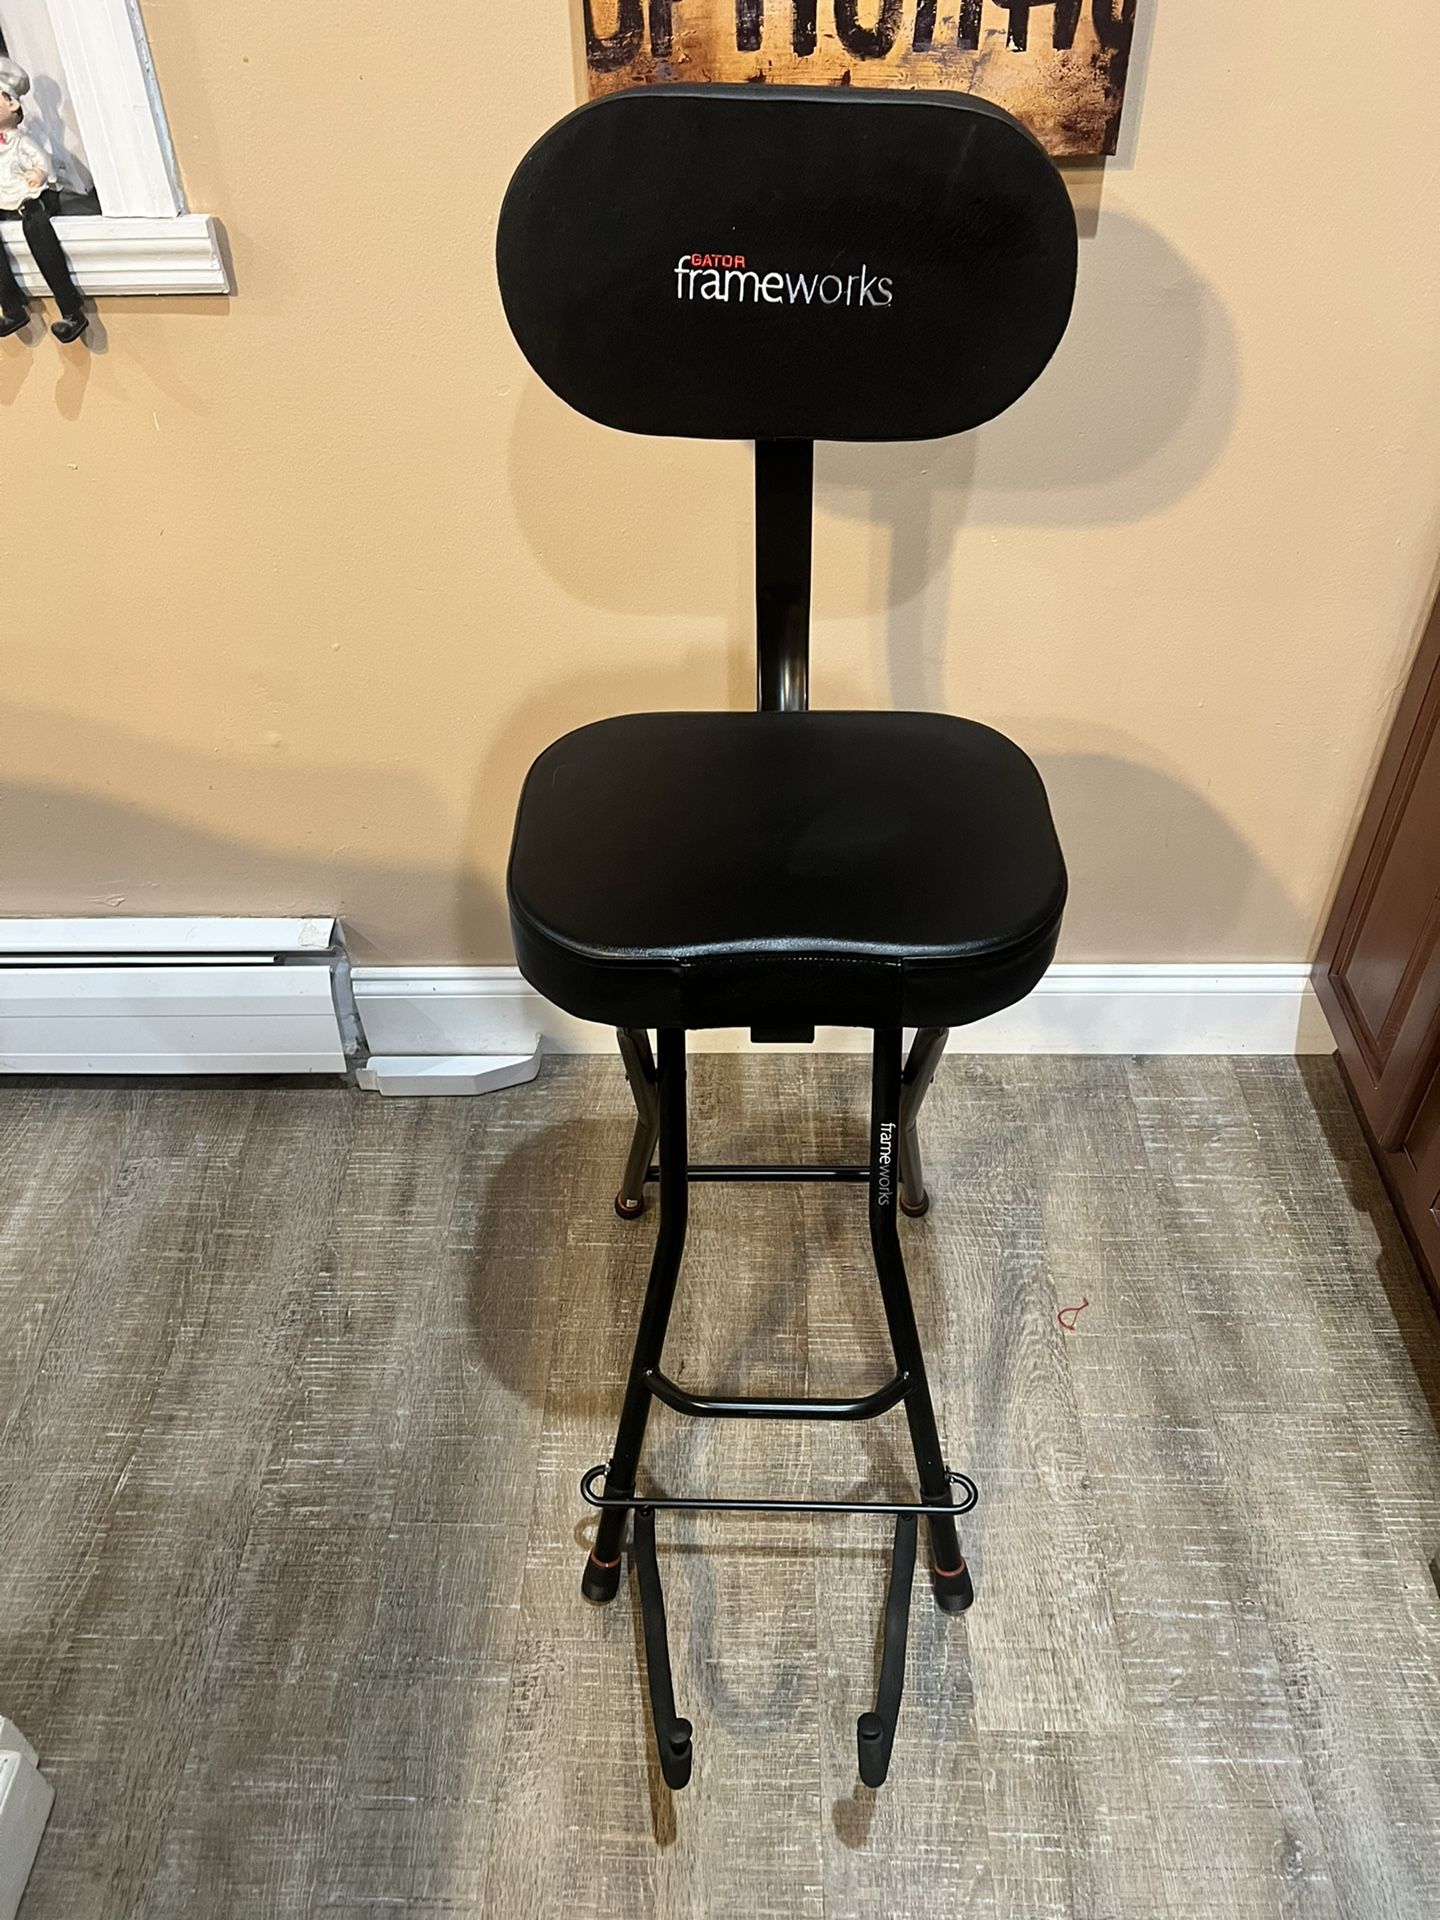 Frameworks guitar stool